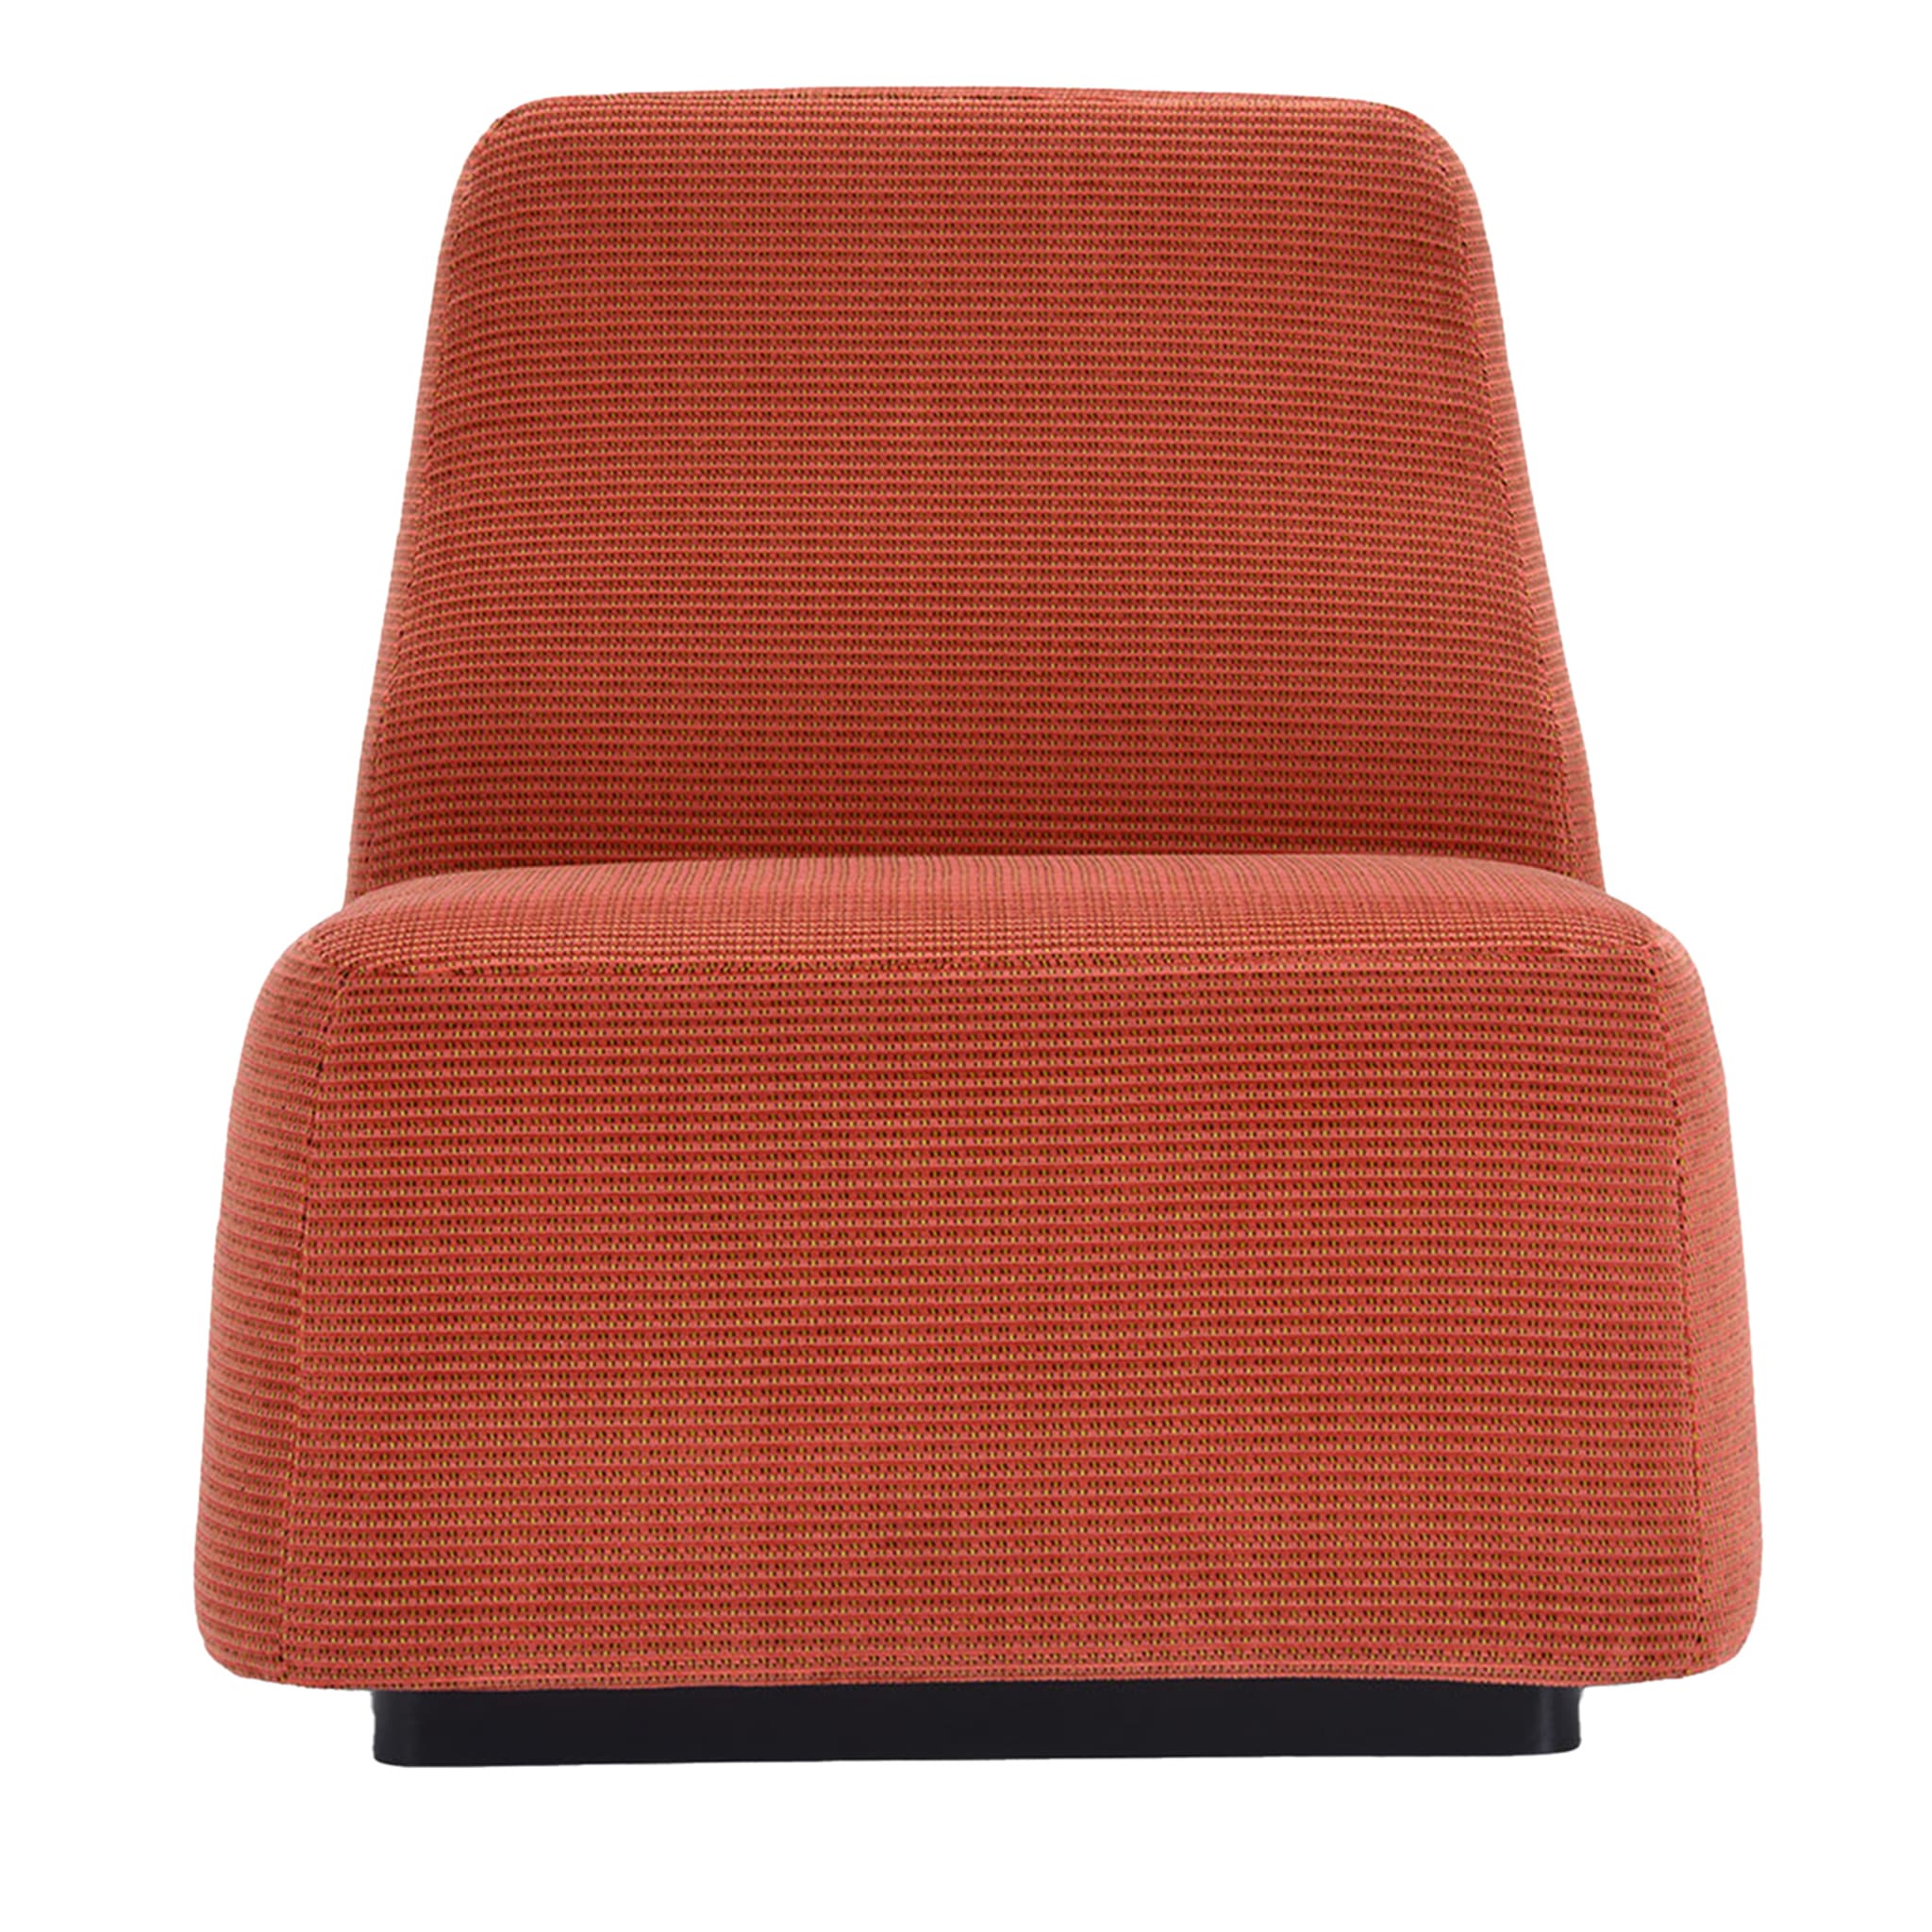 Nuda Orange Lounge Chair by Simone Micheli - Main view